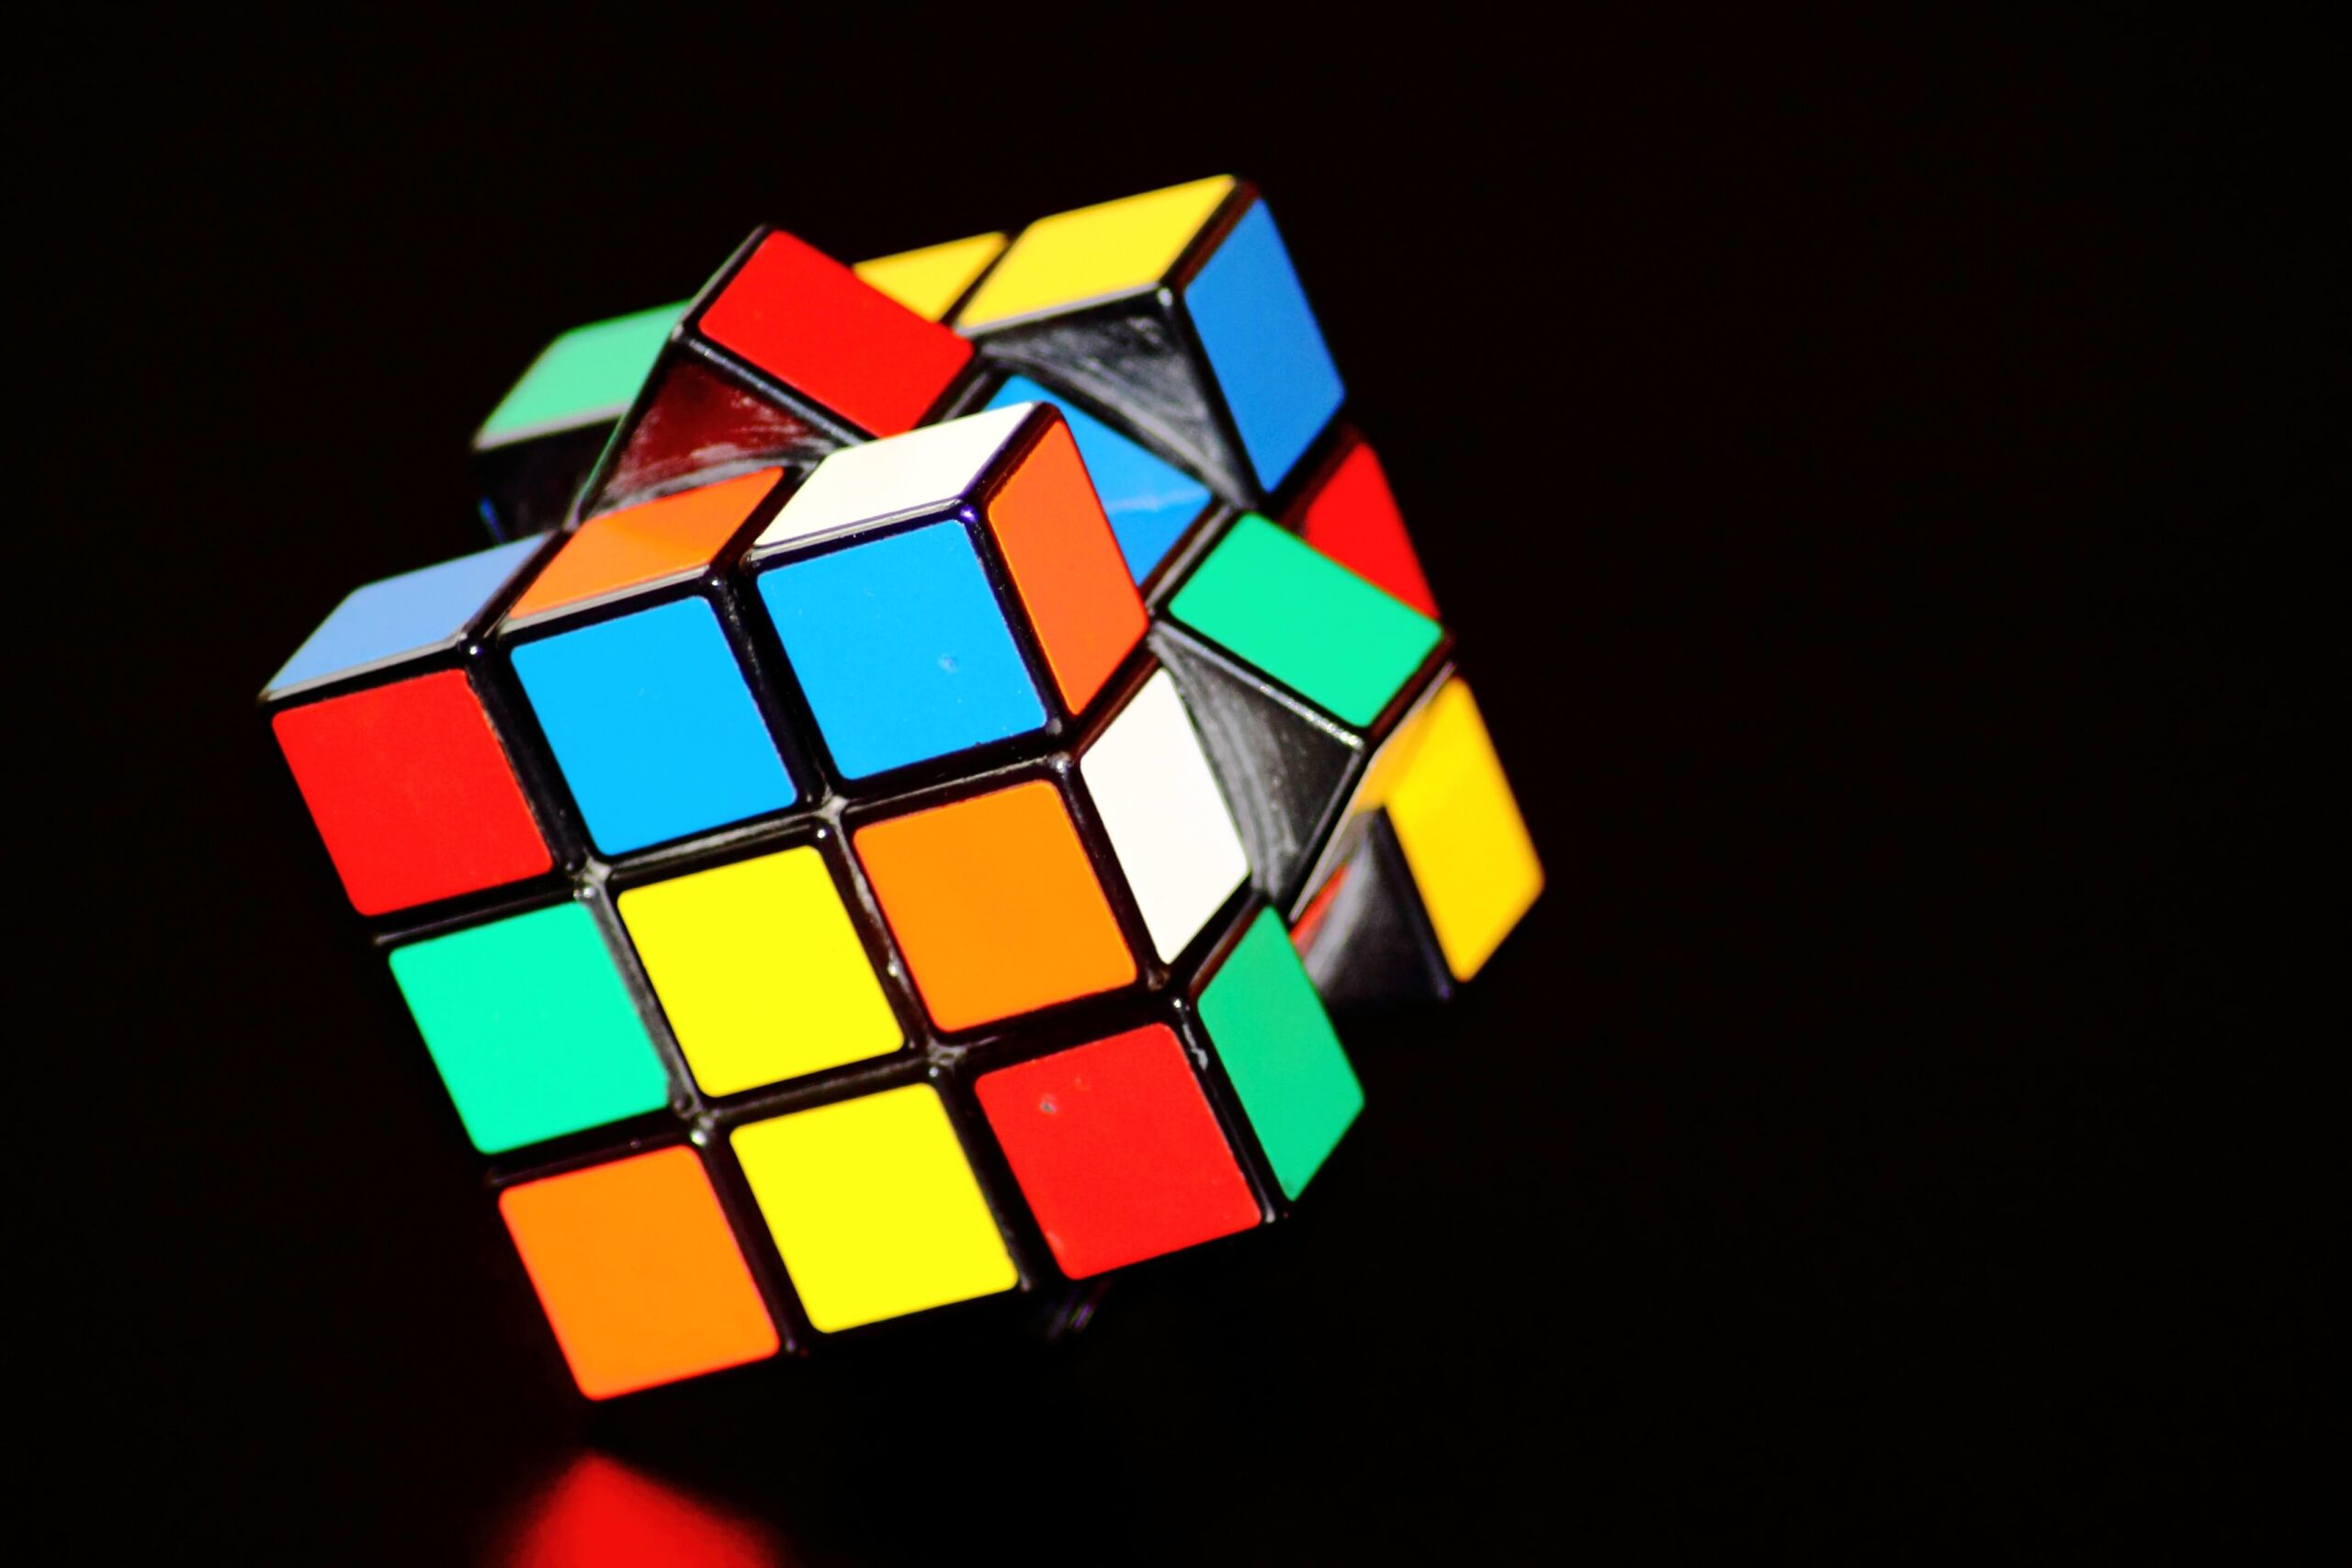 Unsolved Rubik's Cube against black background